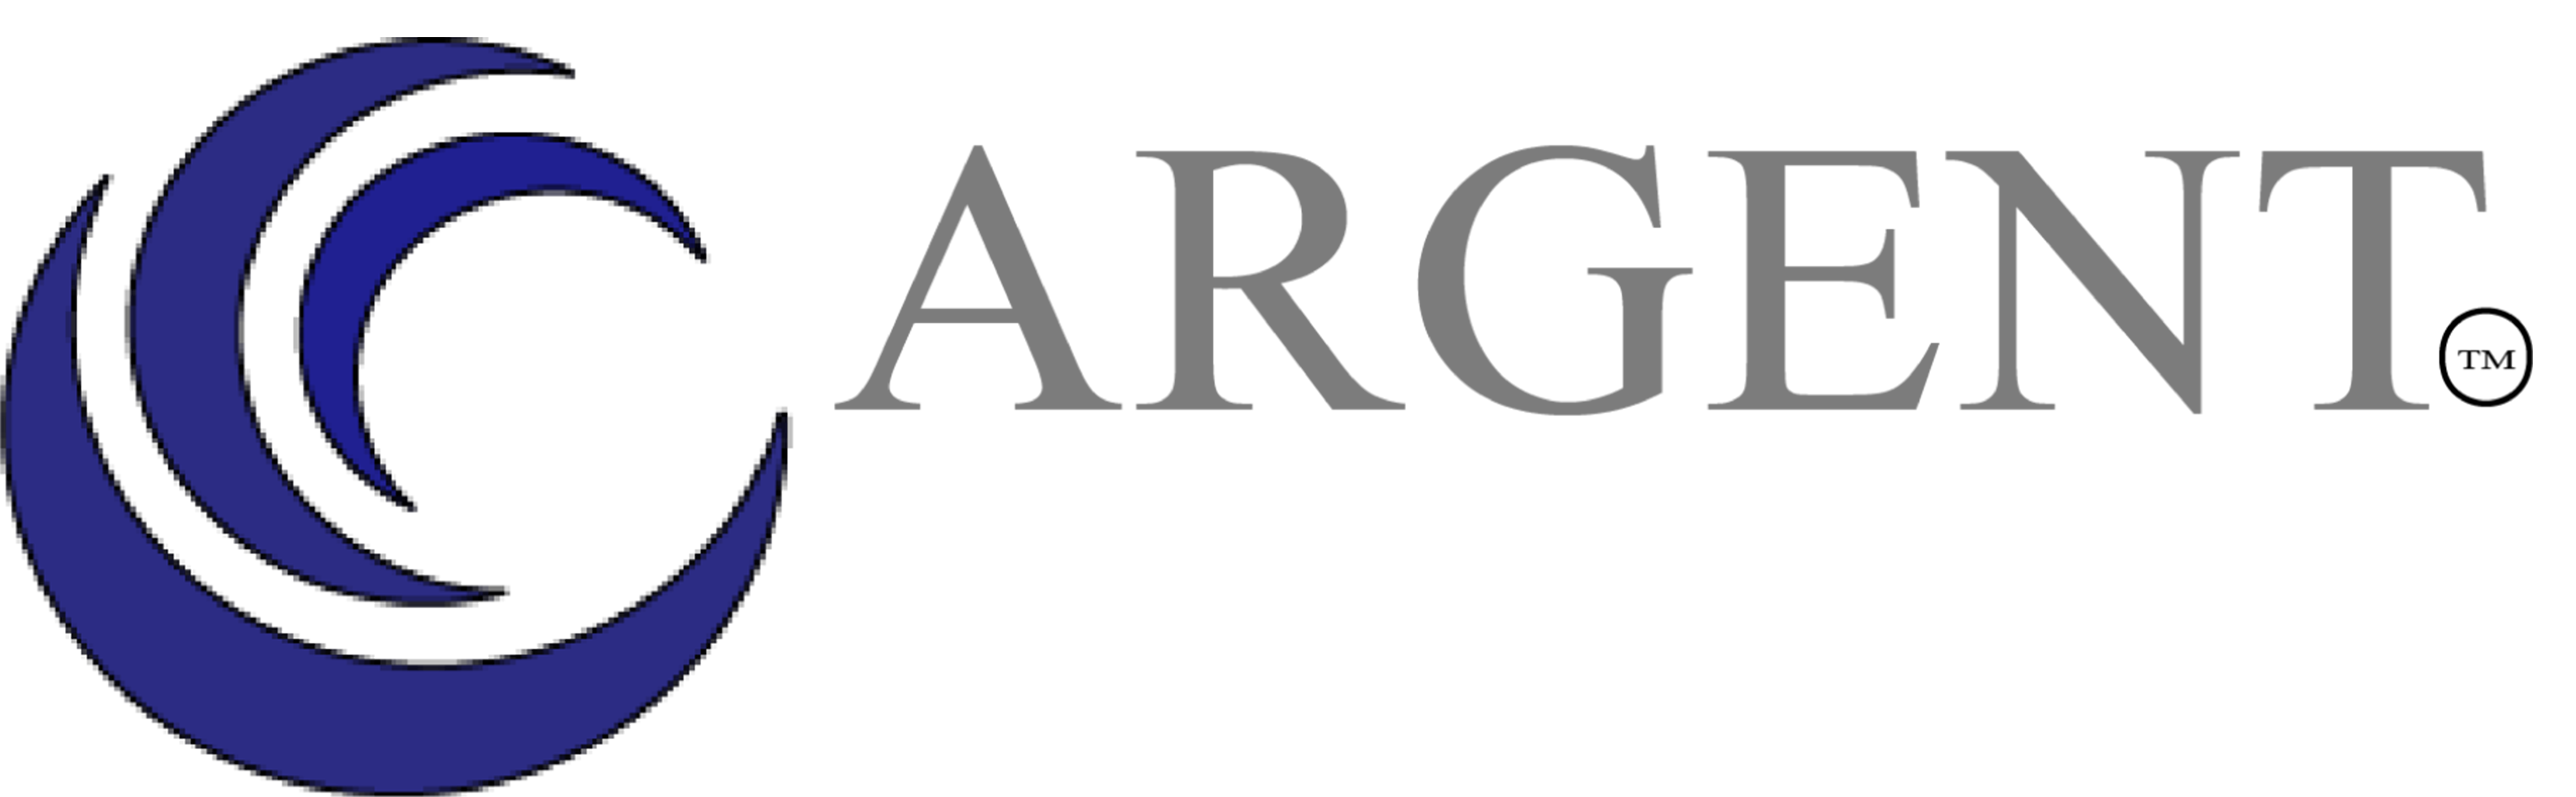 Argent World Services